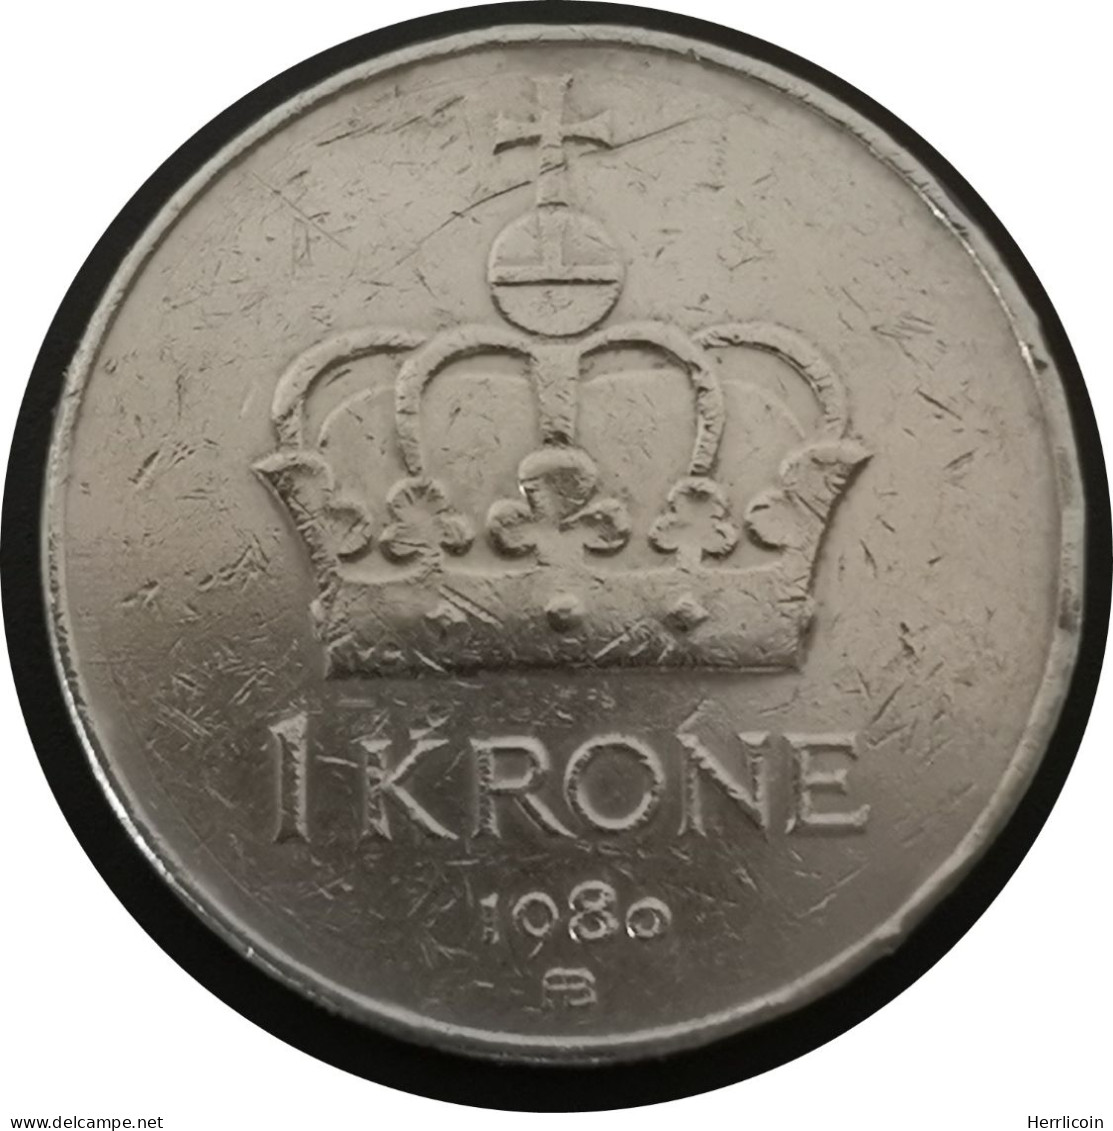 Monnaie Norvège - 1980 - 1 Krone - Olav V - Norway